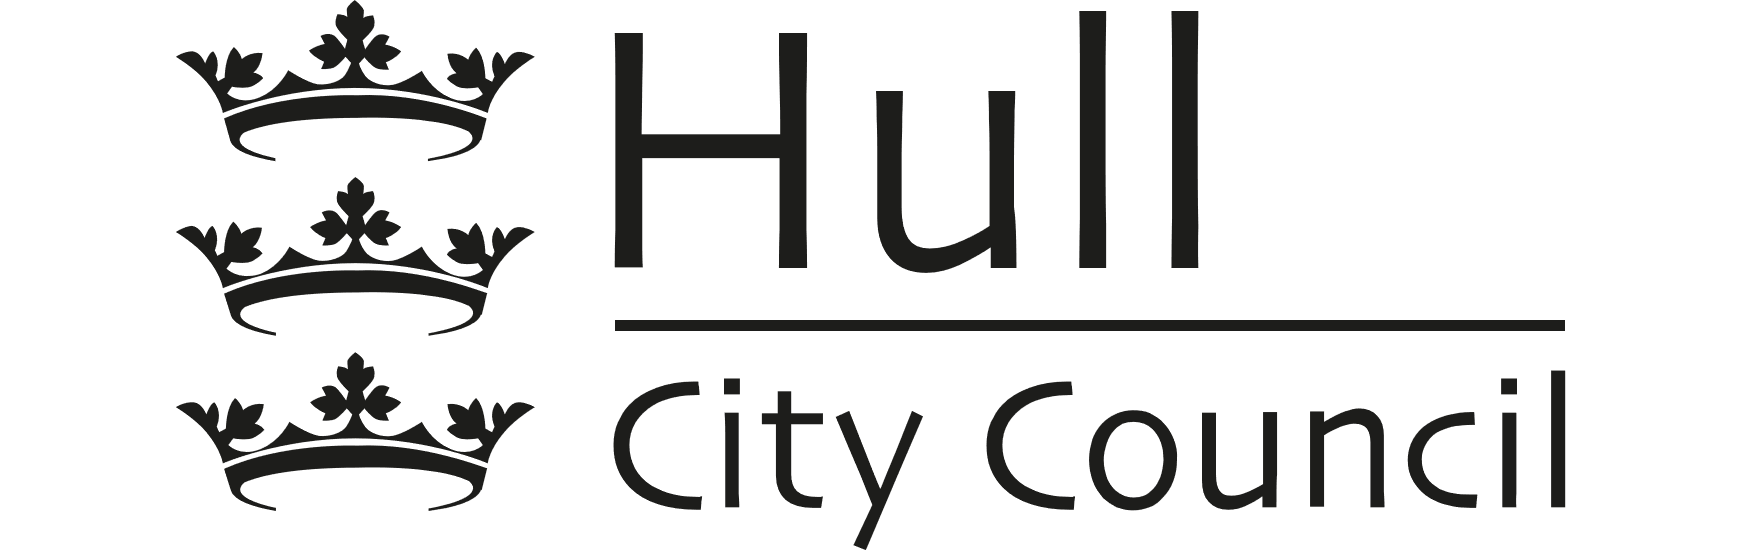 Hull-City-Council-bw